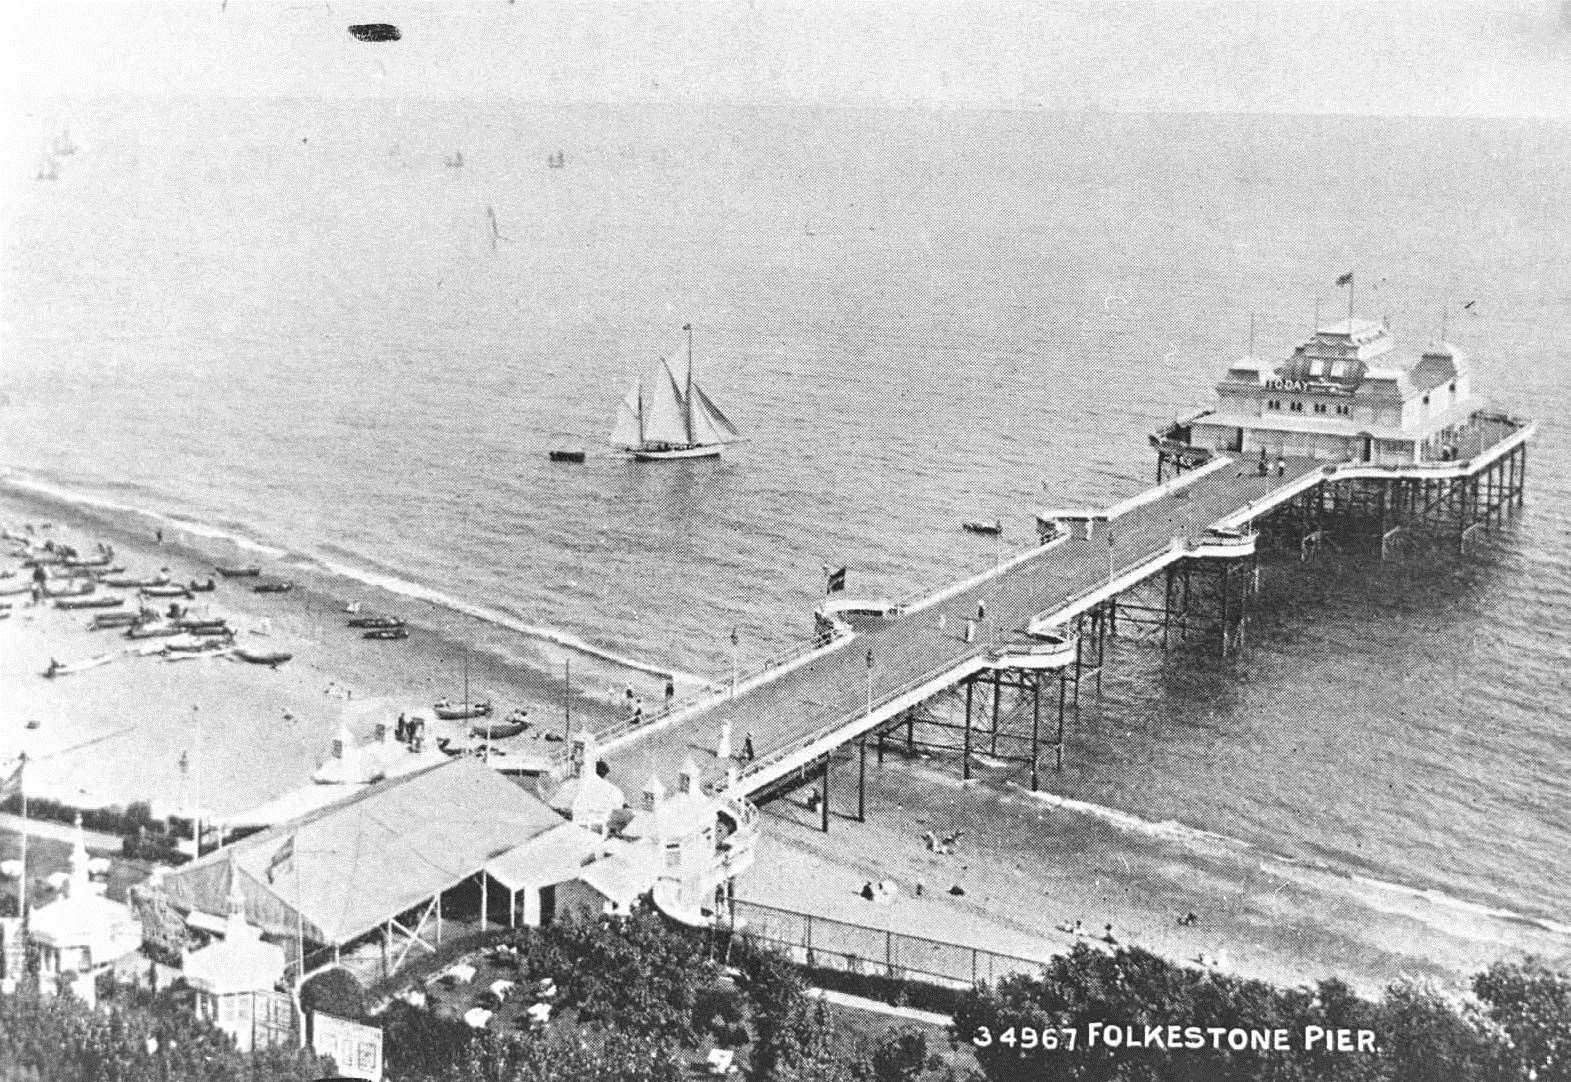 The old Folkestone pier